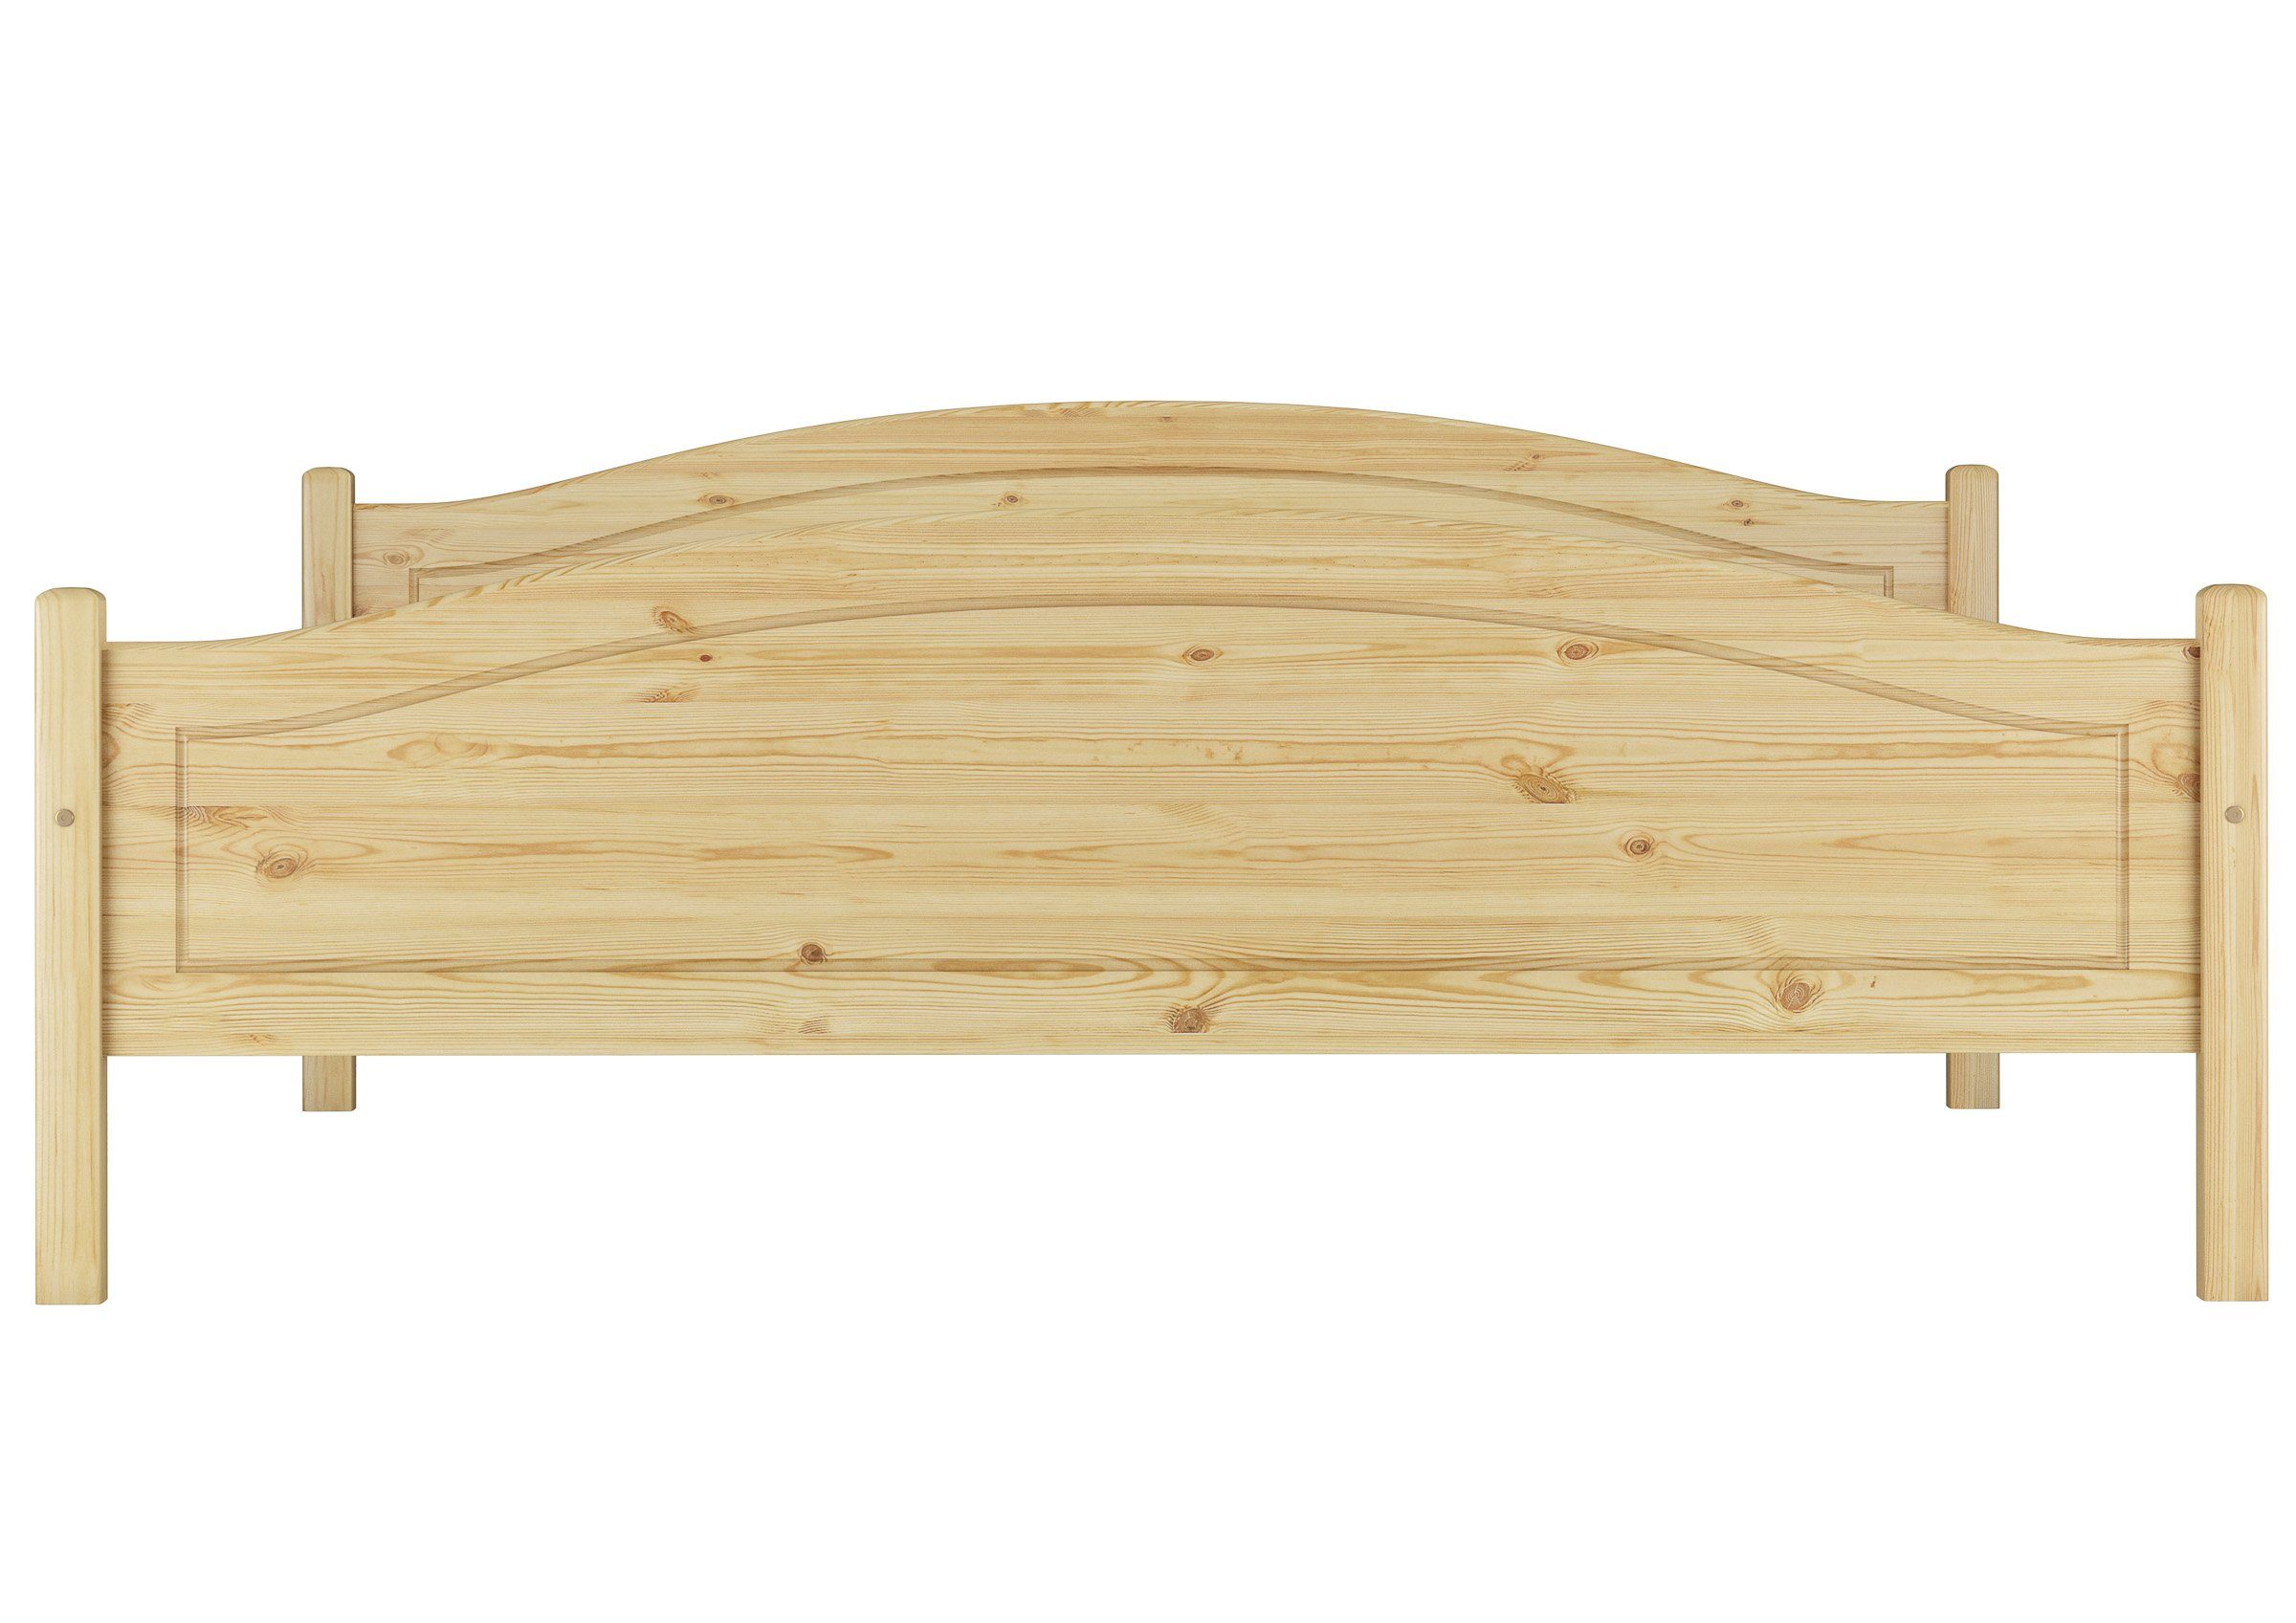 in Zubehör Kiefer Klassisches 160x220 wählbar, Doppelbett Kieferfarblos Überlänge Bett lackiert ERST-HOLZ